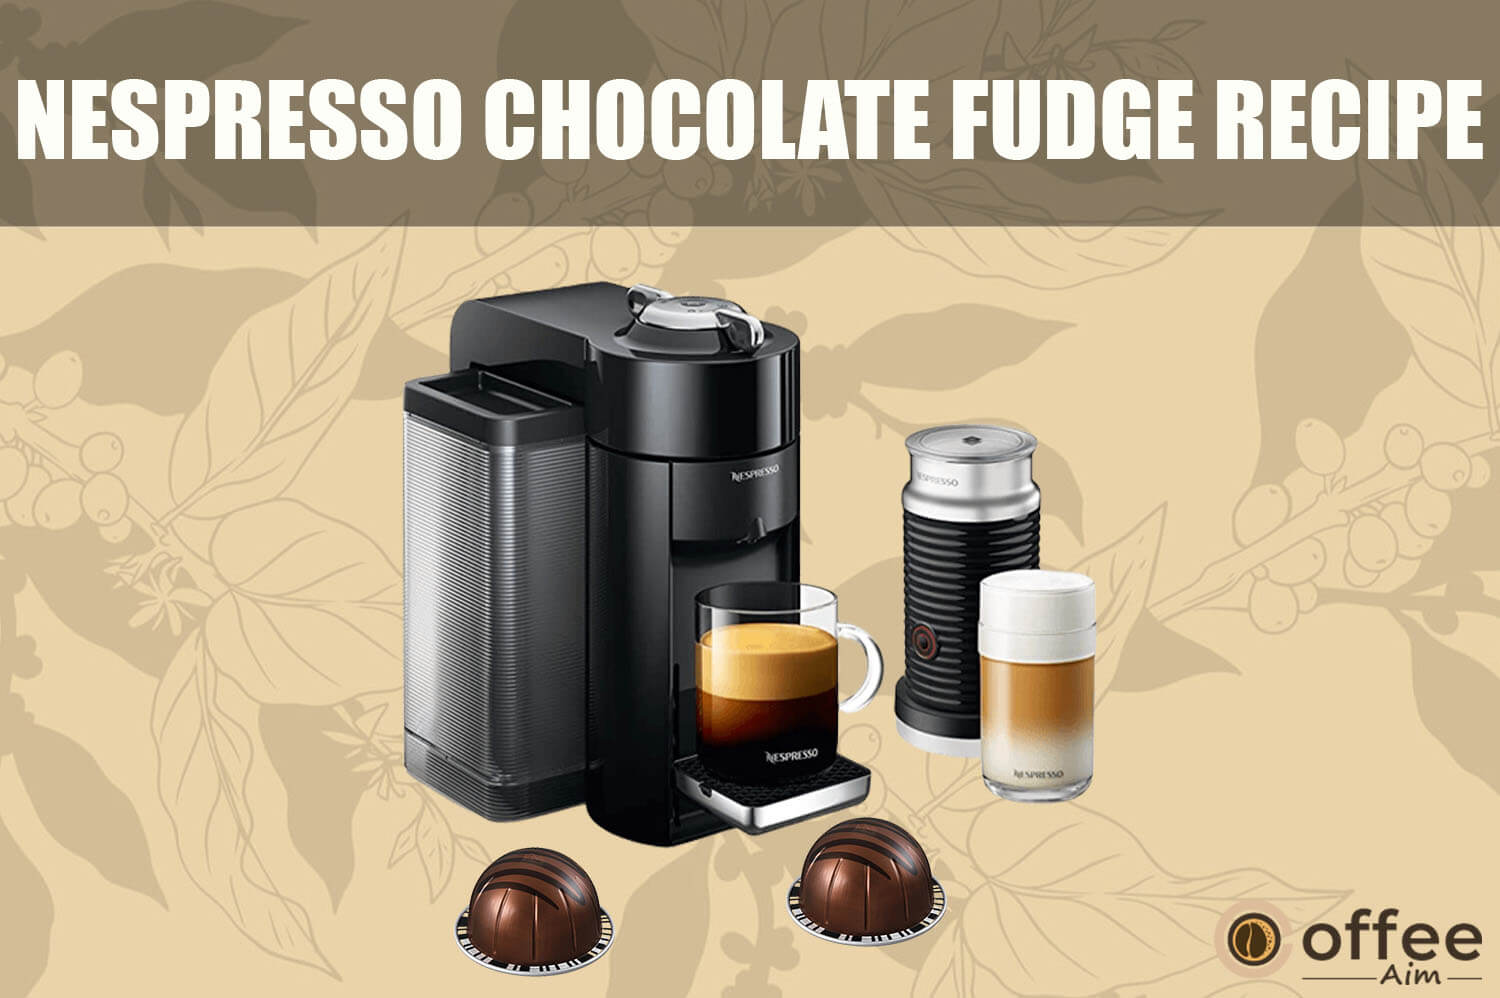 Featured image for the article "Nespresso Chocolate Fudge Recipe"